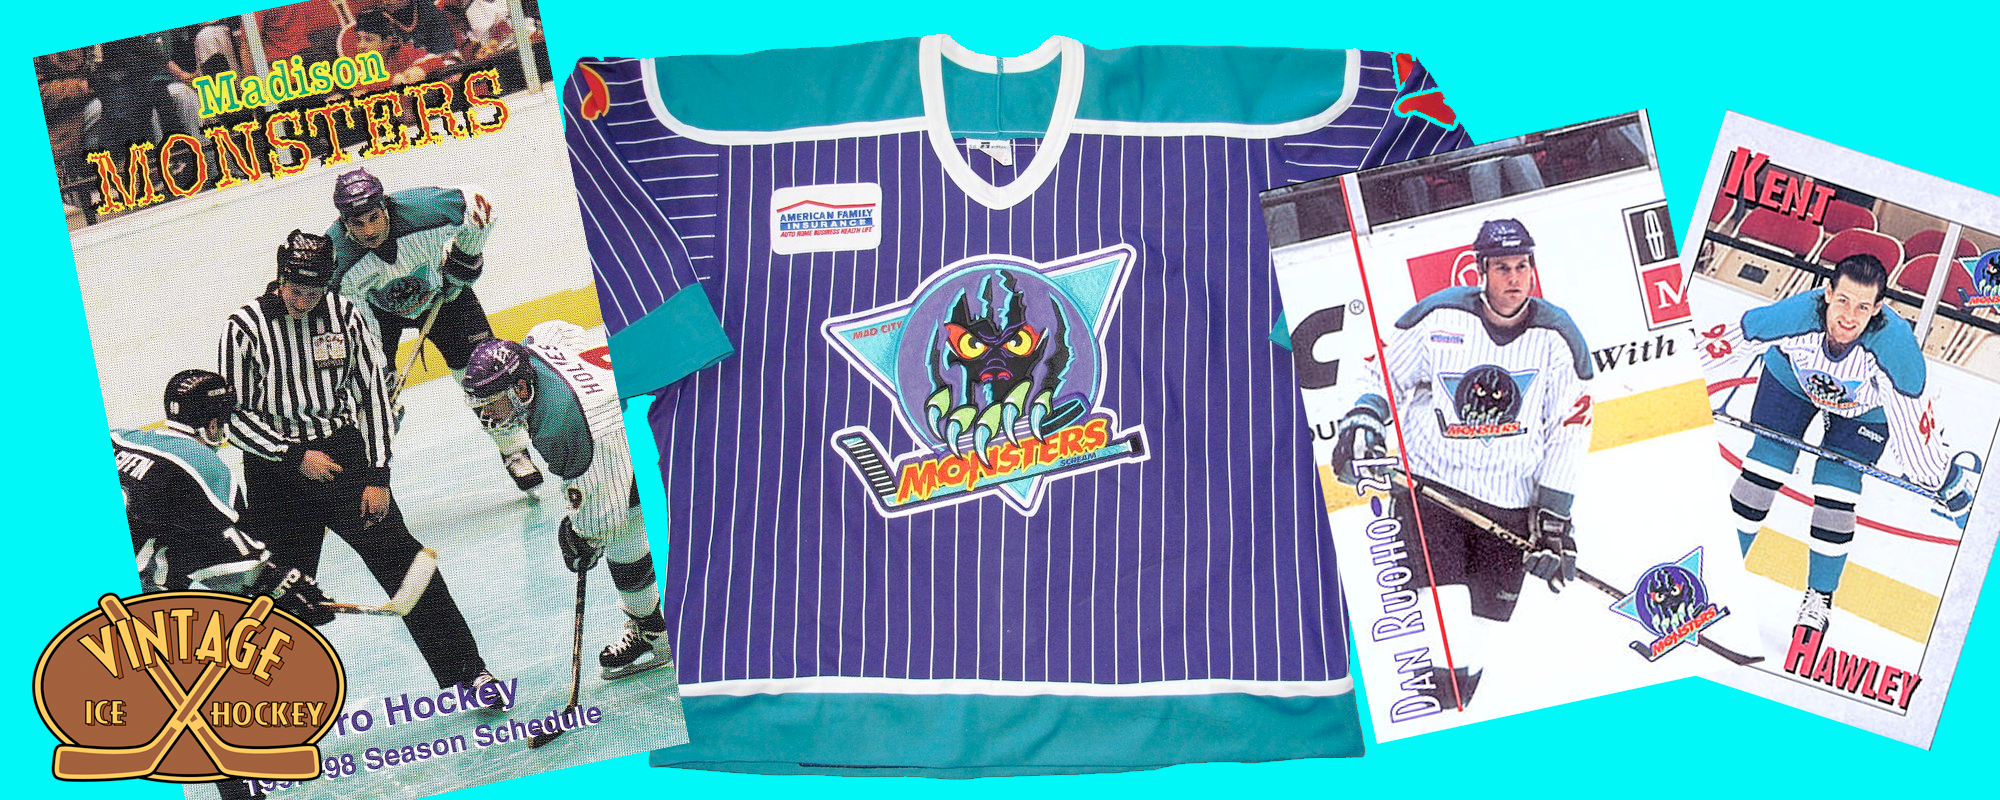 Las Vegas Thunder jersey - odd customization by previous owner :  r/hockeyjerseys